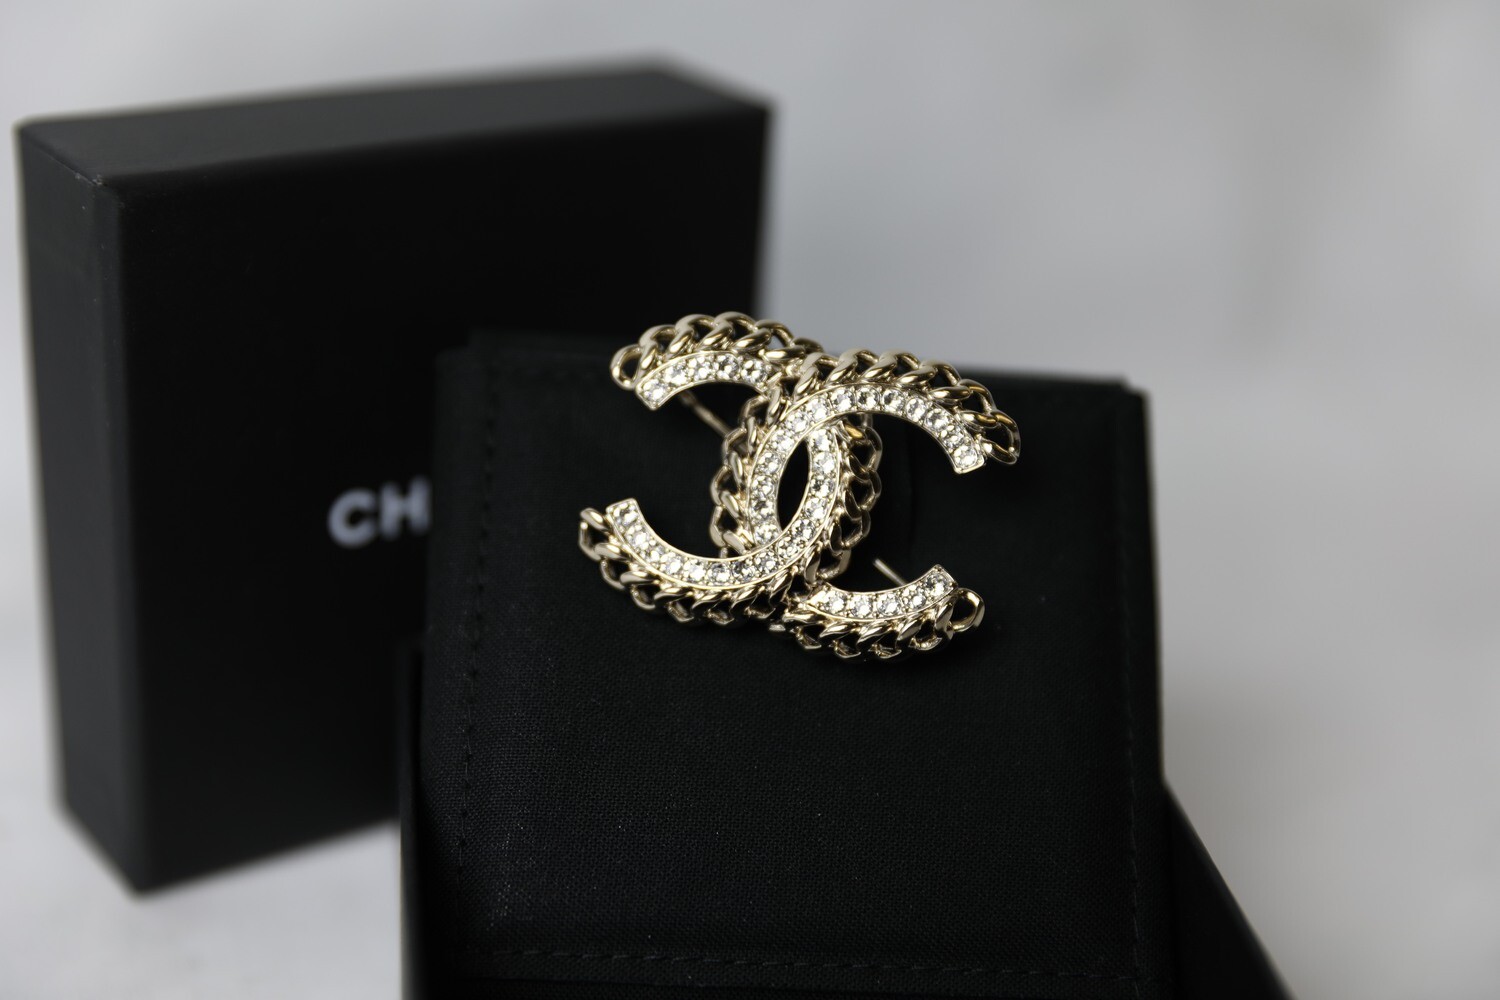 Chanel Chain Statement Brooch, New in Box